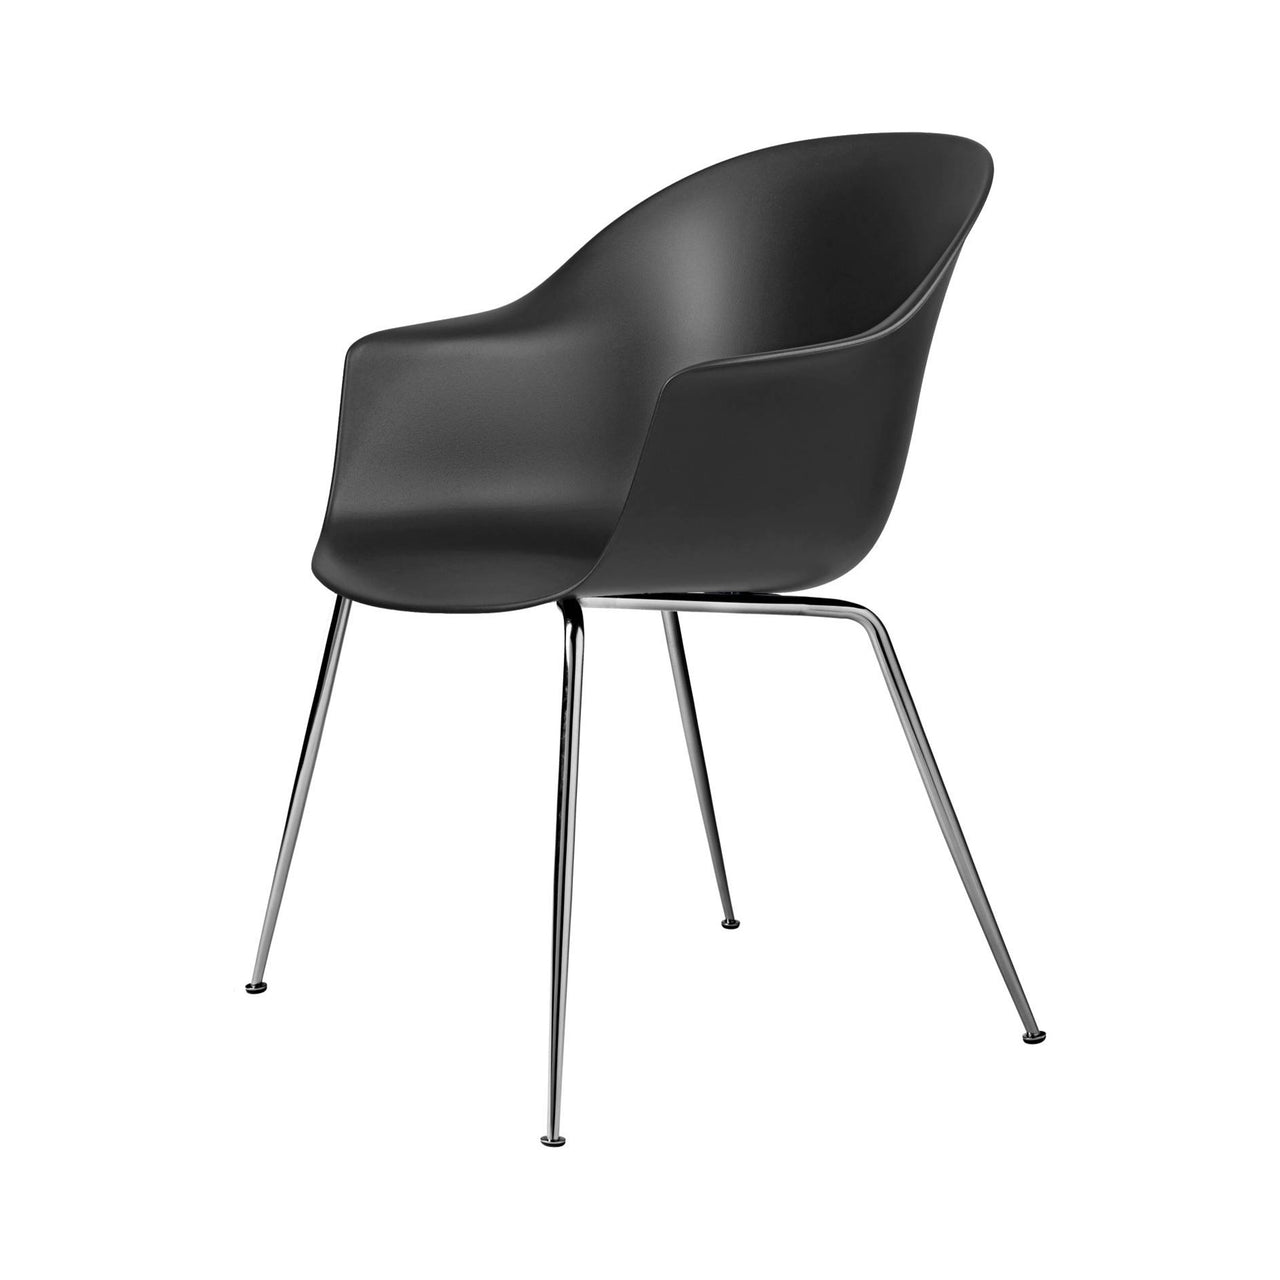 Bat Dining Chair: Conic Base + Chrome + Black + Felt Glides